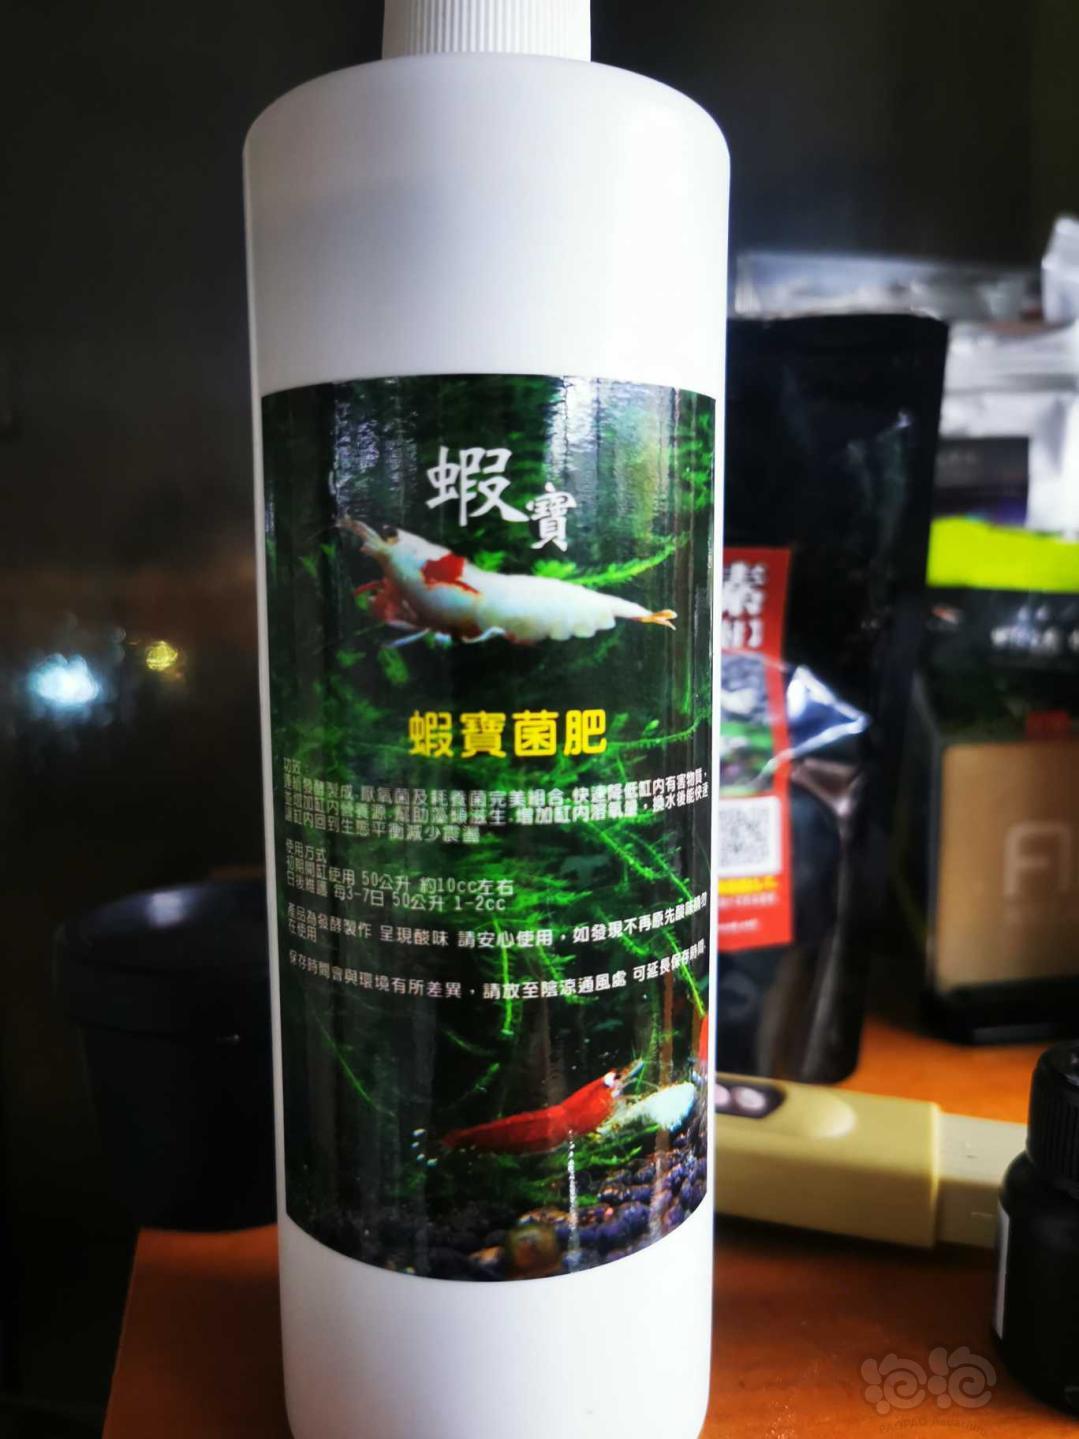 2021-1-23#RMB拍卖台湾森林虾宝菌肥1瓶-图1